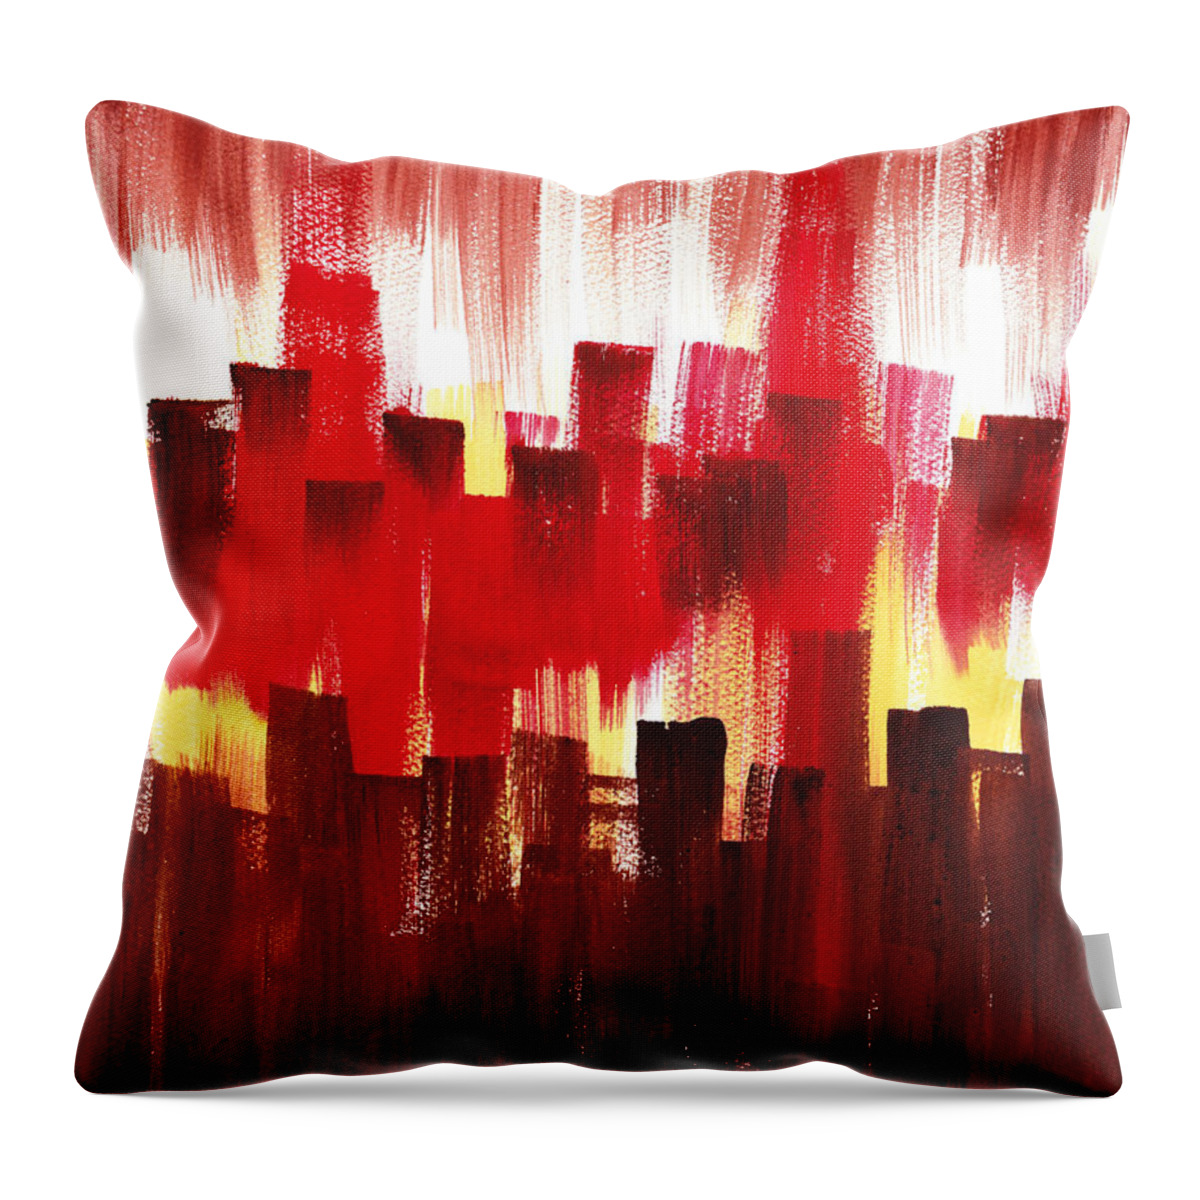 Abstract Throw Pillow featuring the painting Urban Abstract Evening Lights by Irina Sztukowski